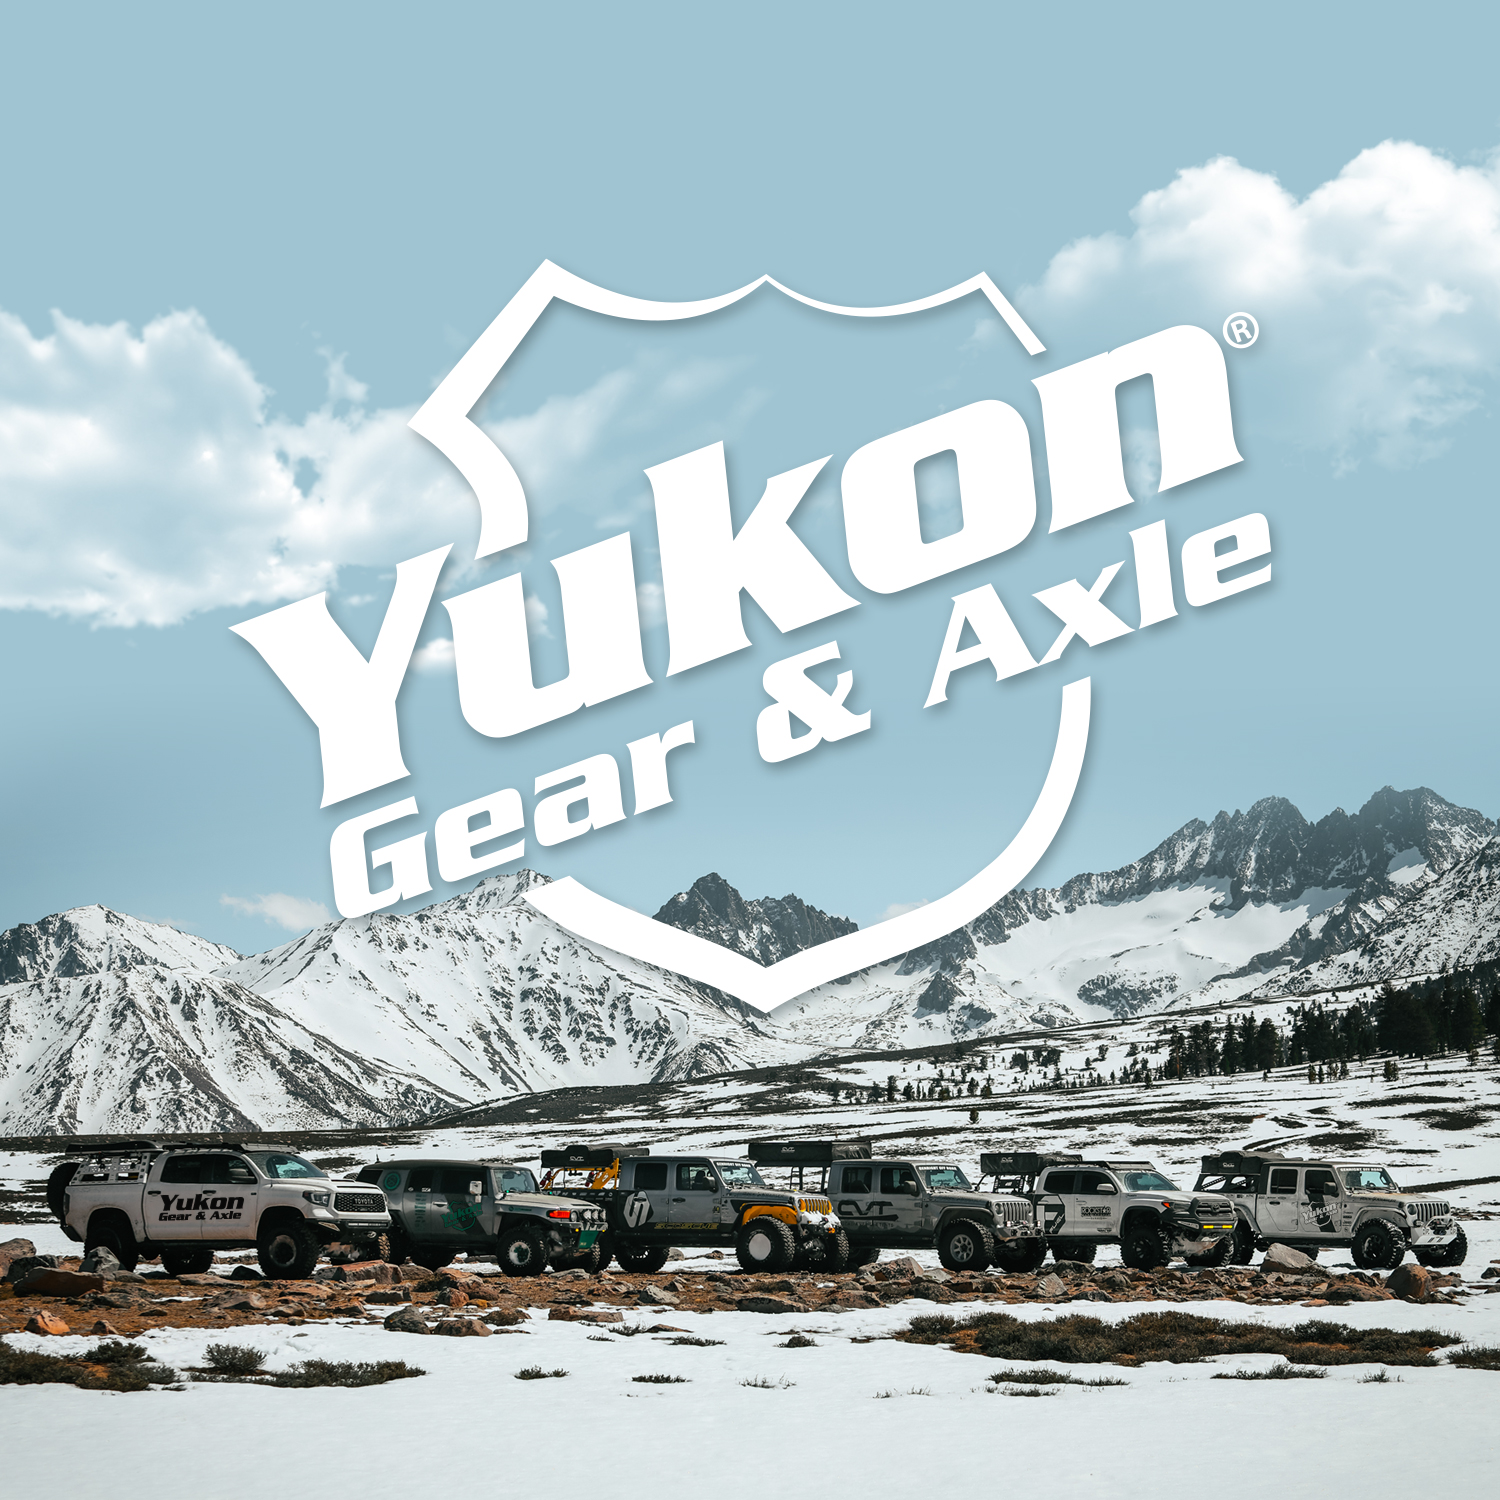 Yukon Muscle Car Limited Slip & Re-Gear Kit for GM 55P, 17 spline, 3.36 ratio